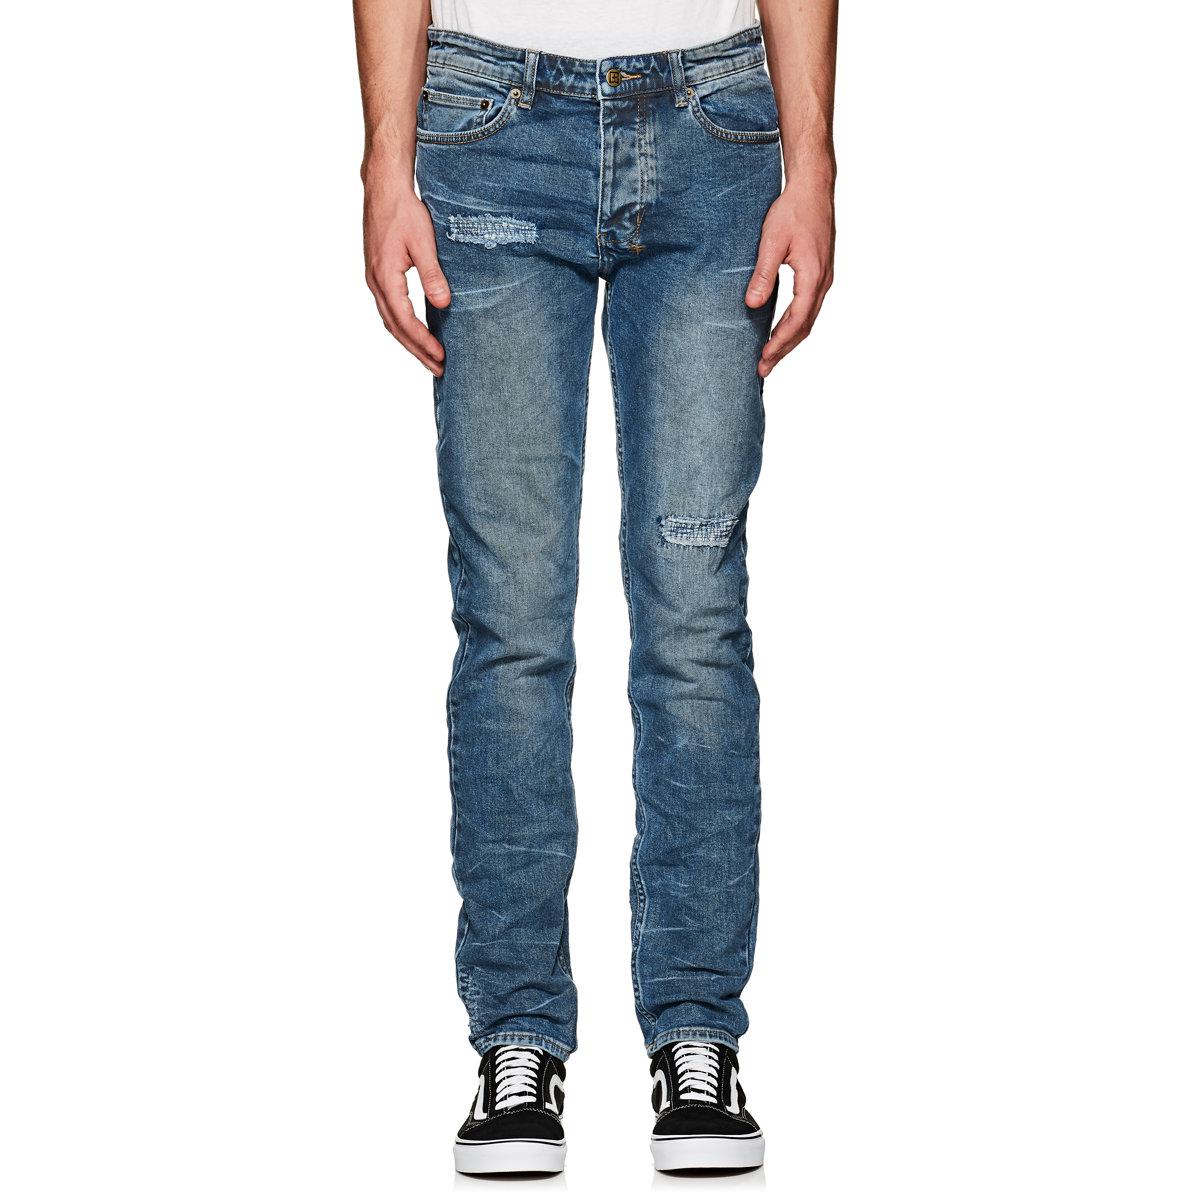 Lyst - Ksubi Chitch Slim Jeans in Blue for Men